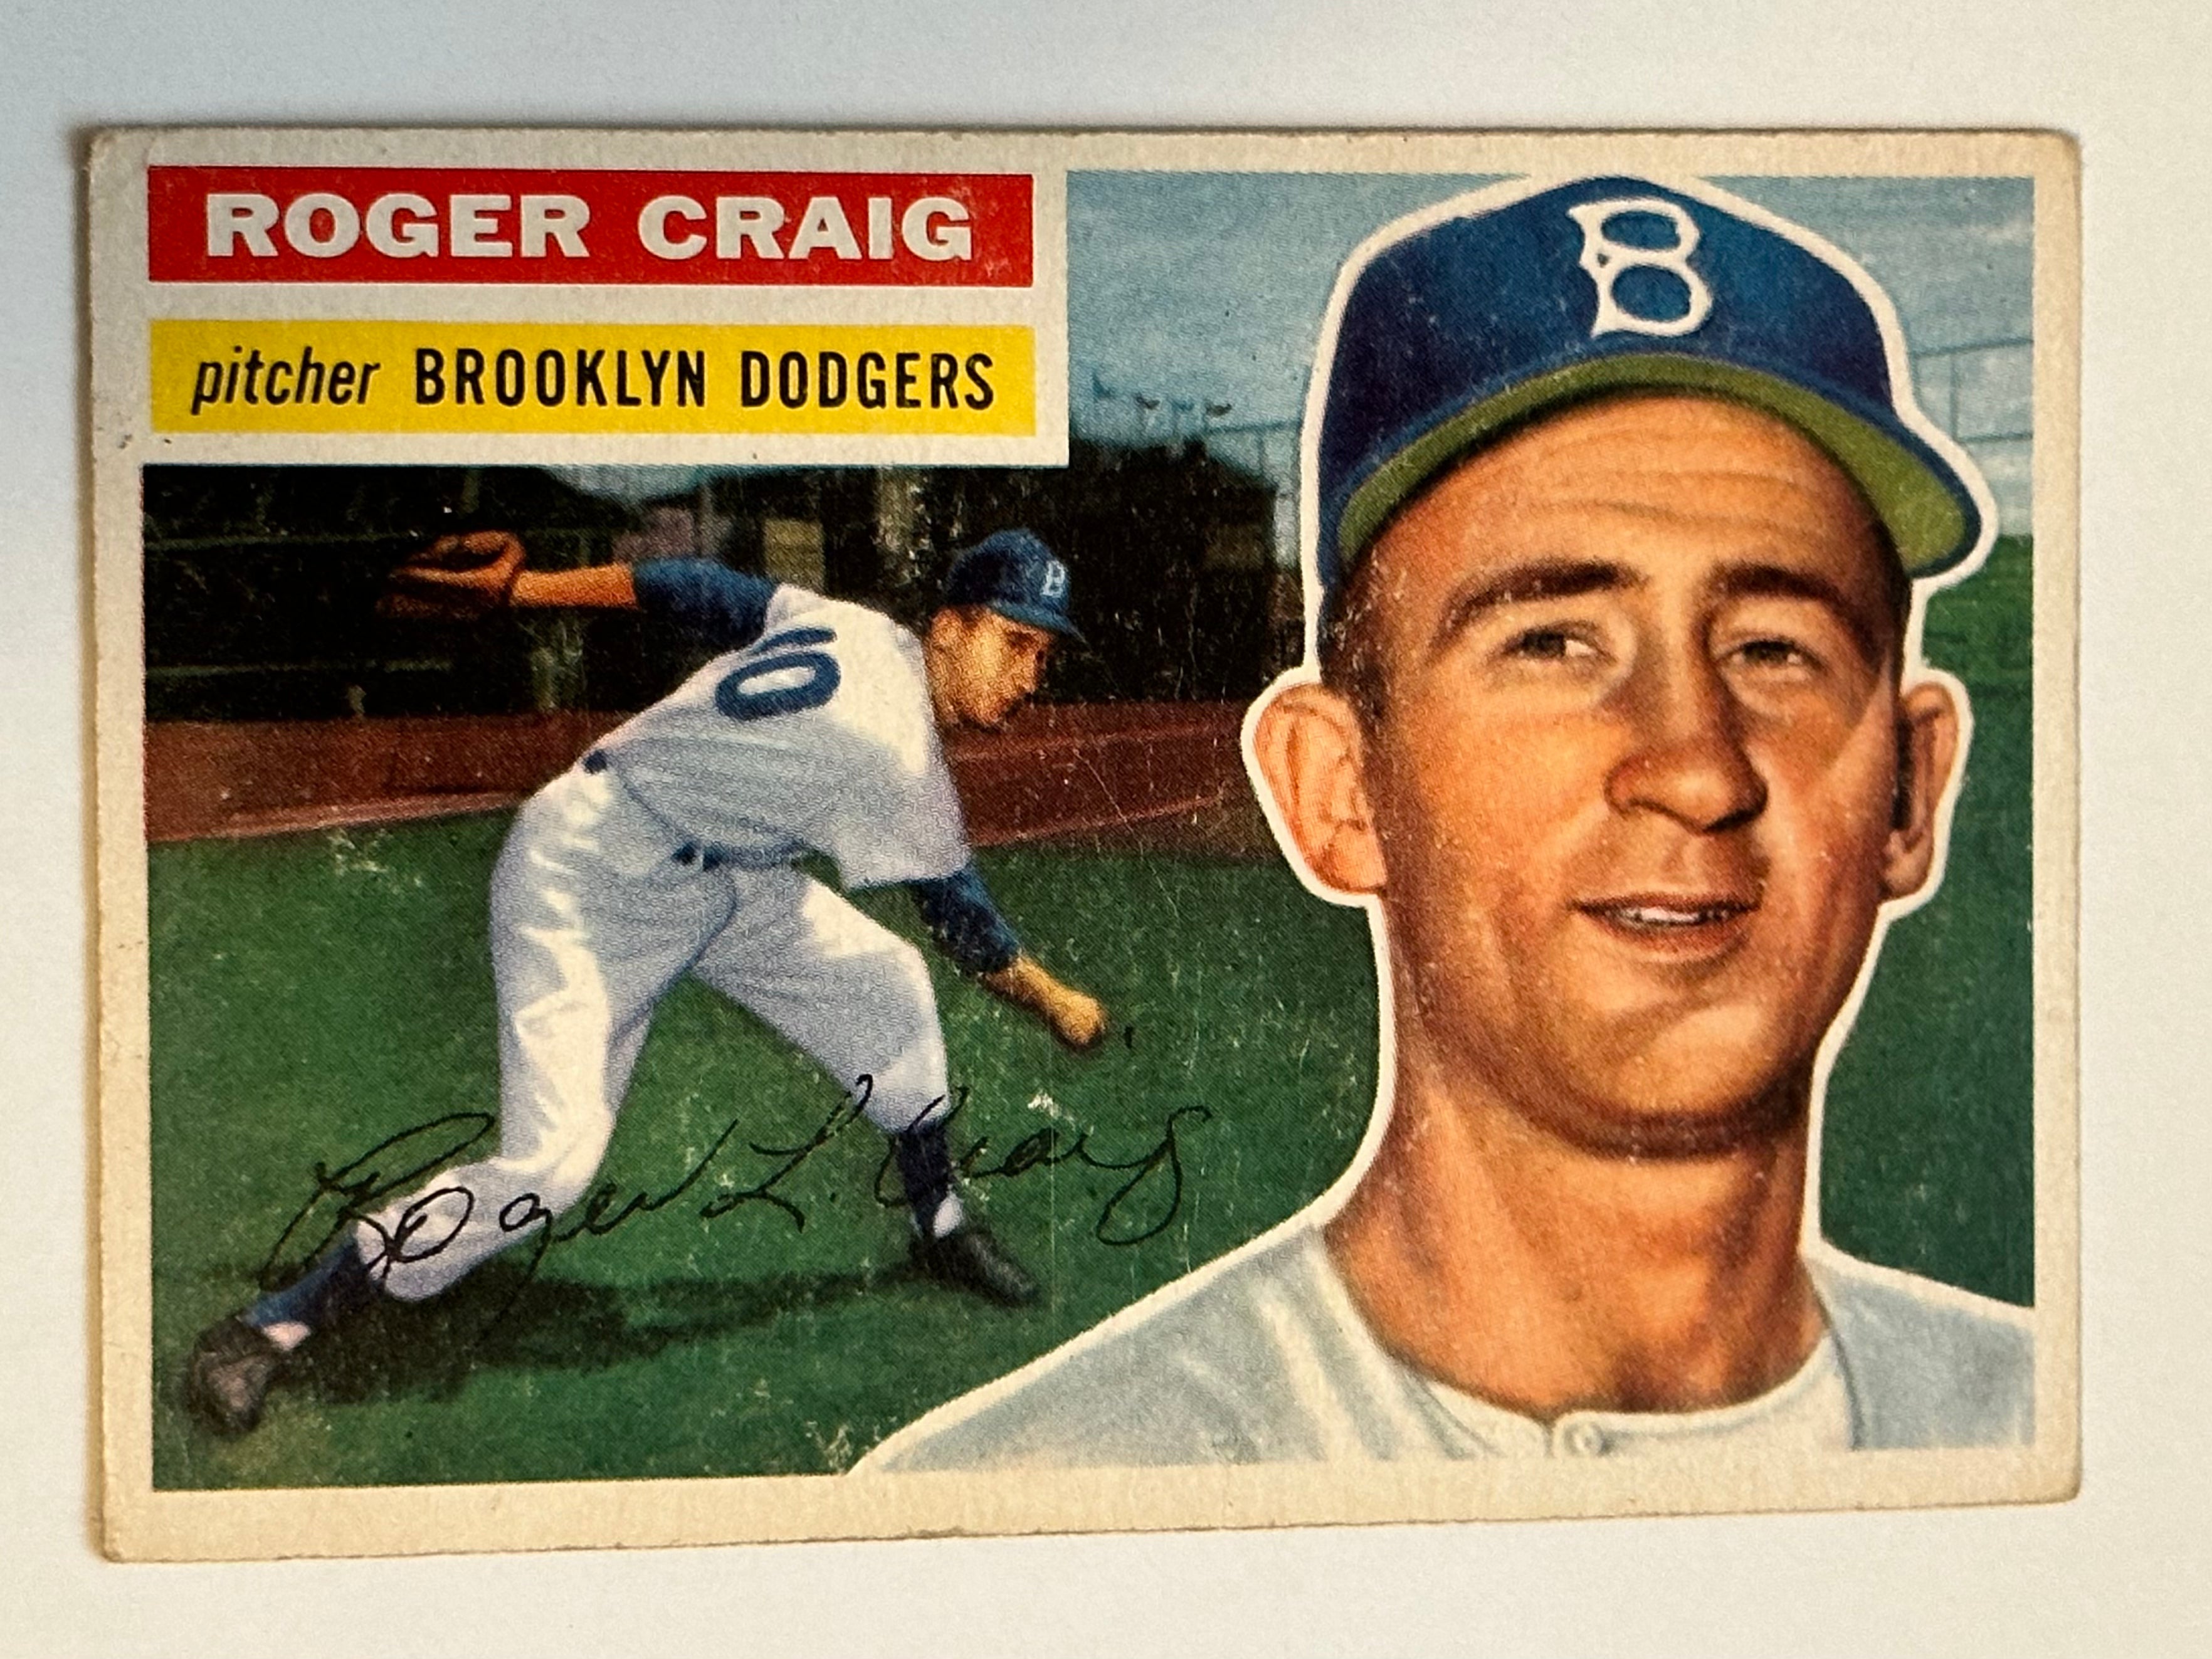 1956 Topps Roger Craig baseball rookie card